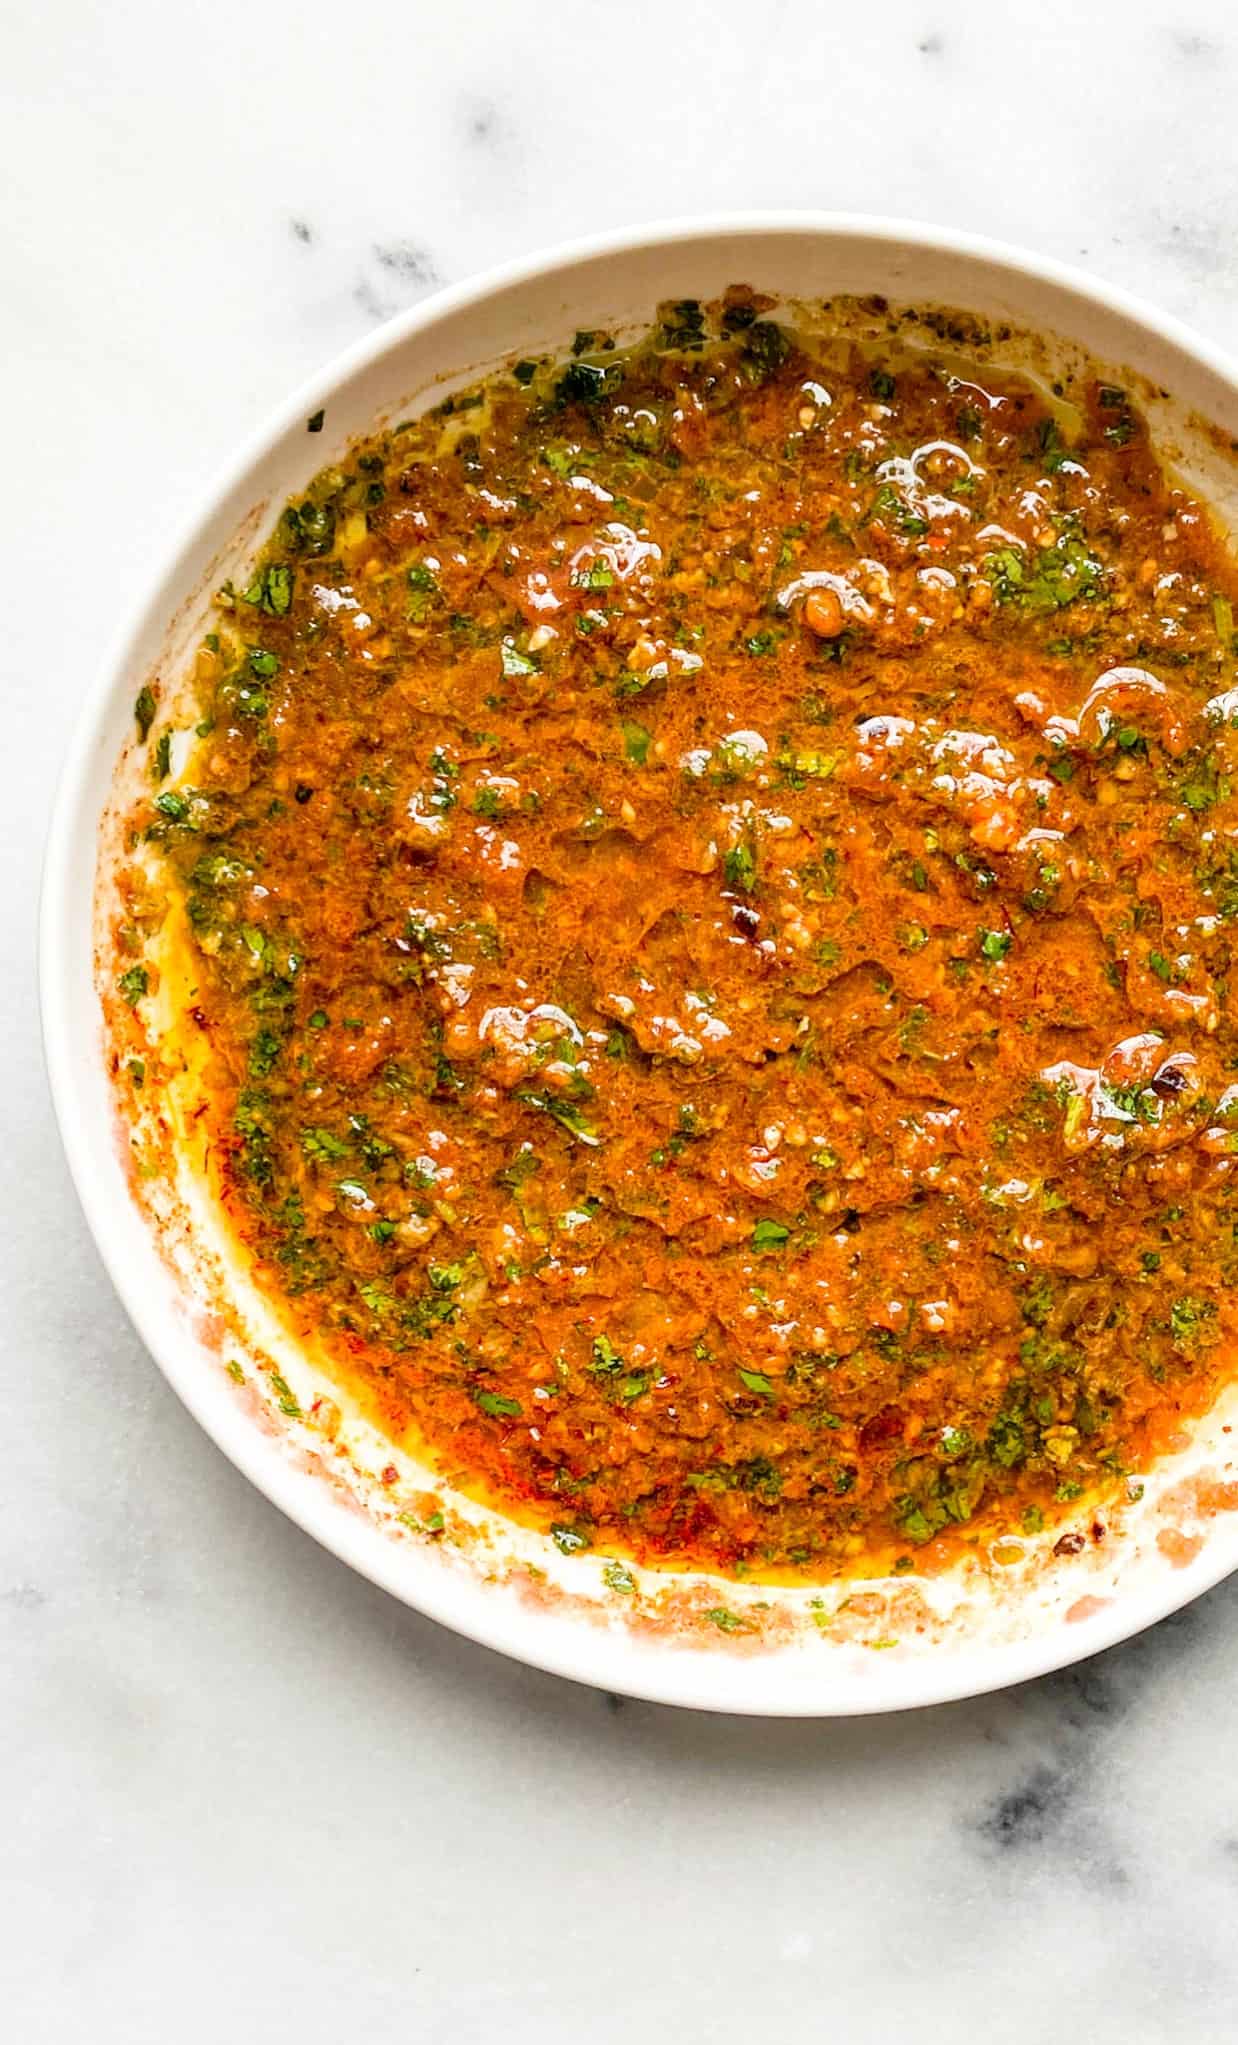 Moroccan chermoula sauce